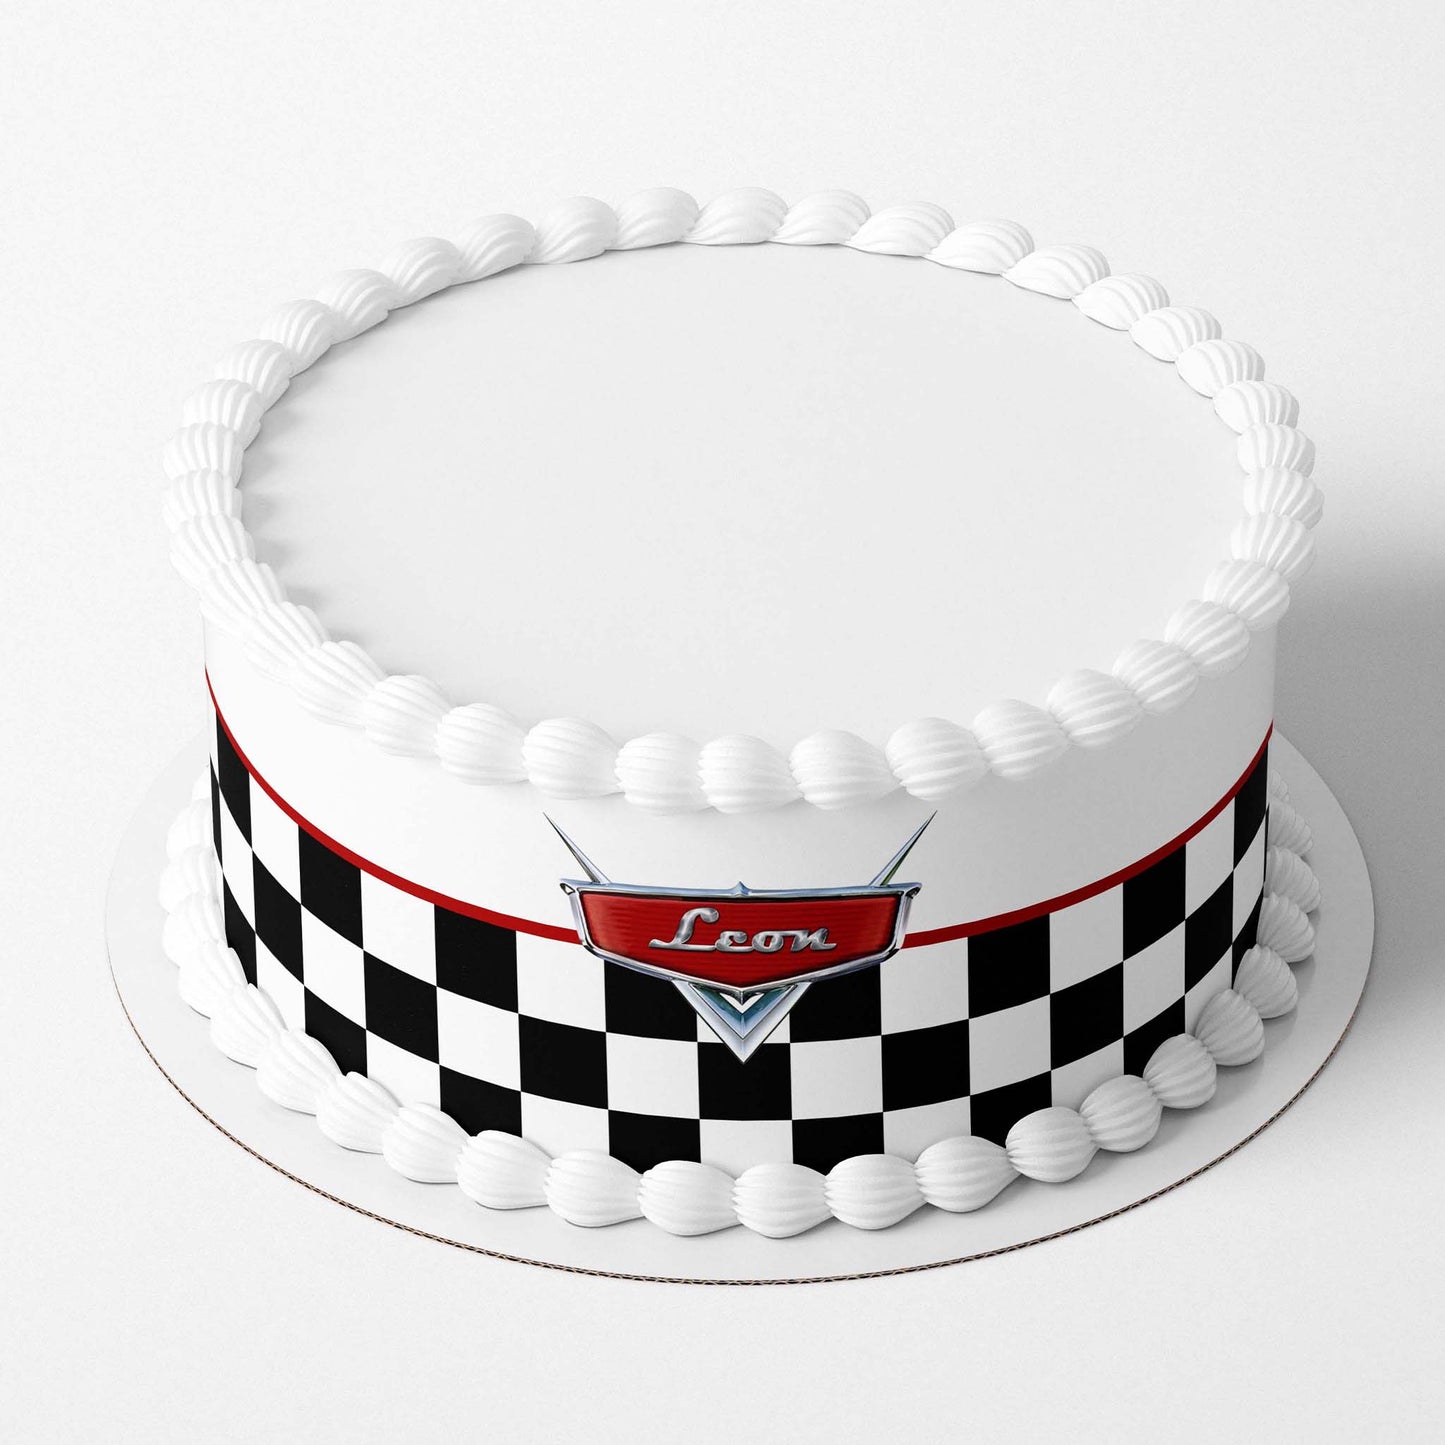 Personalised Cars - Edible Icing Cake Wrap Edible Cake Topper, Edible Cake Image, ,printsoncakes